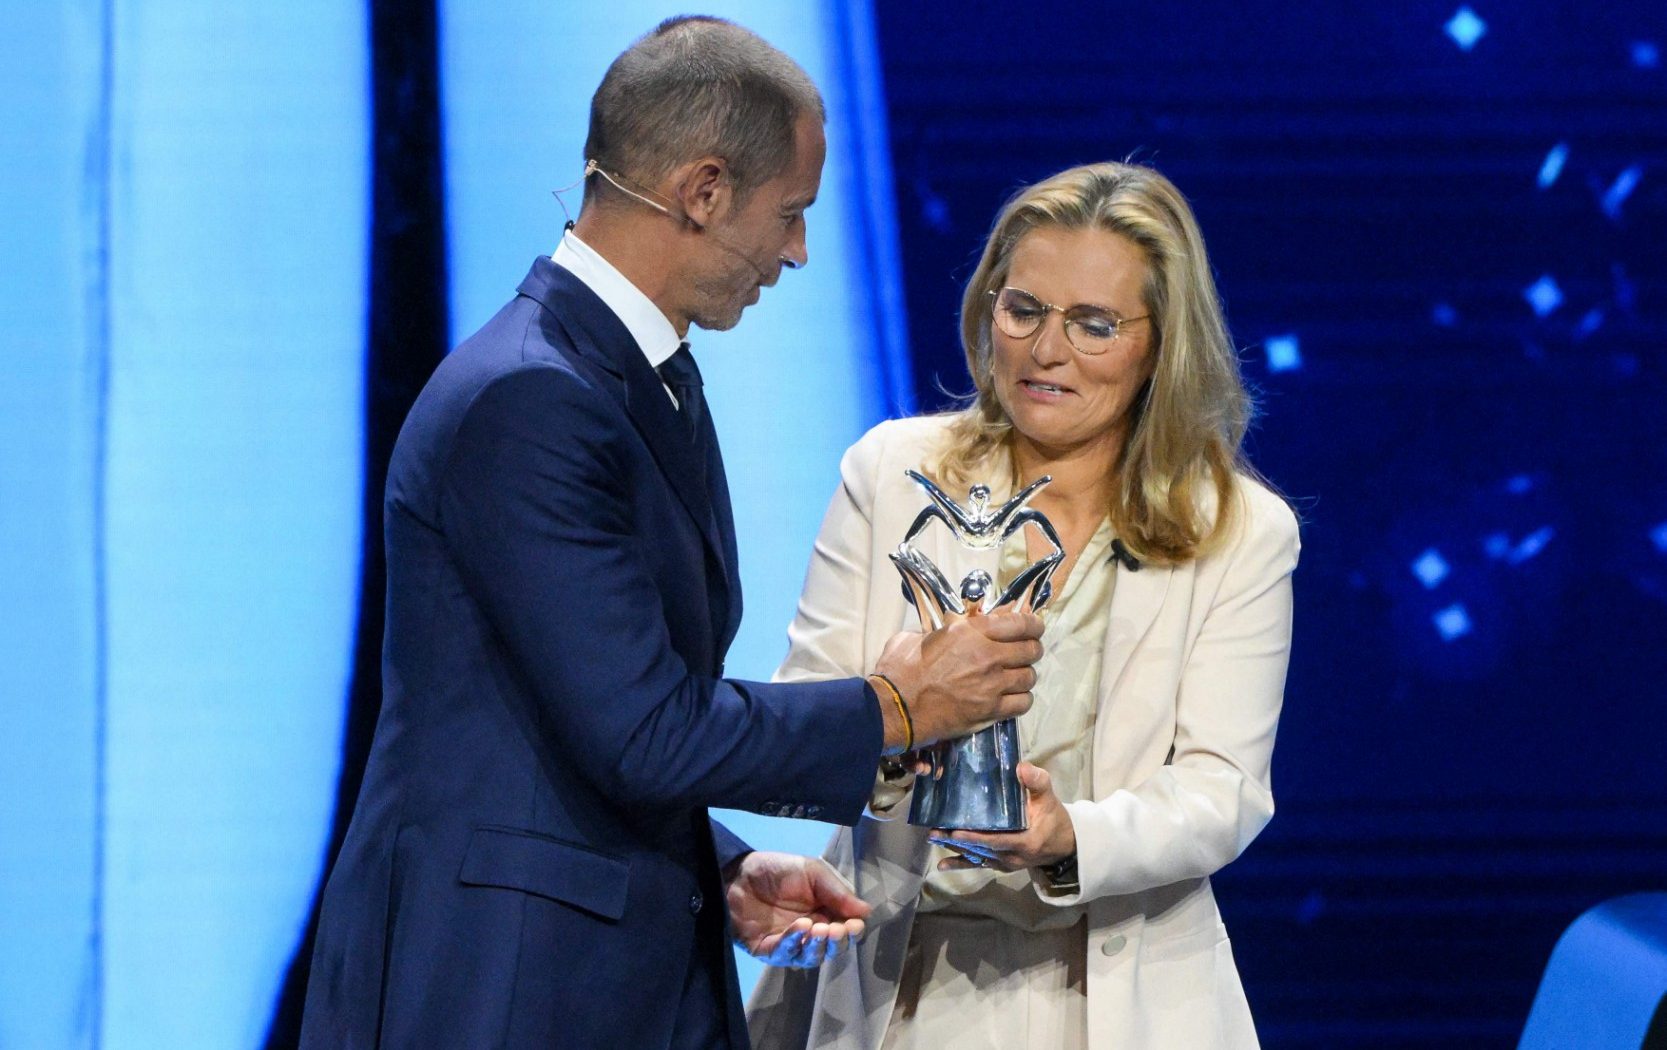 Sarina Wiegman dedicates Uefa Women's Coach of the Year award to Spain players